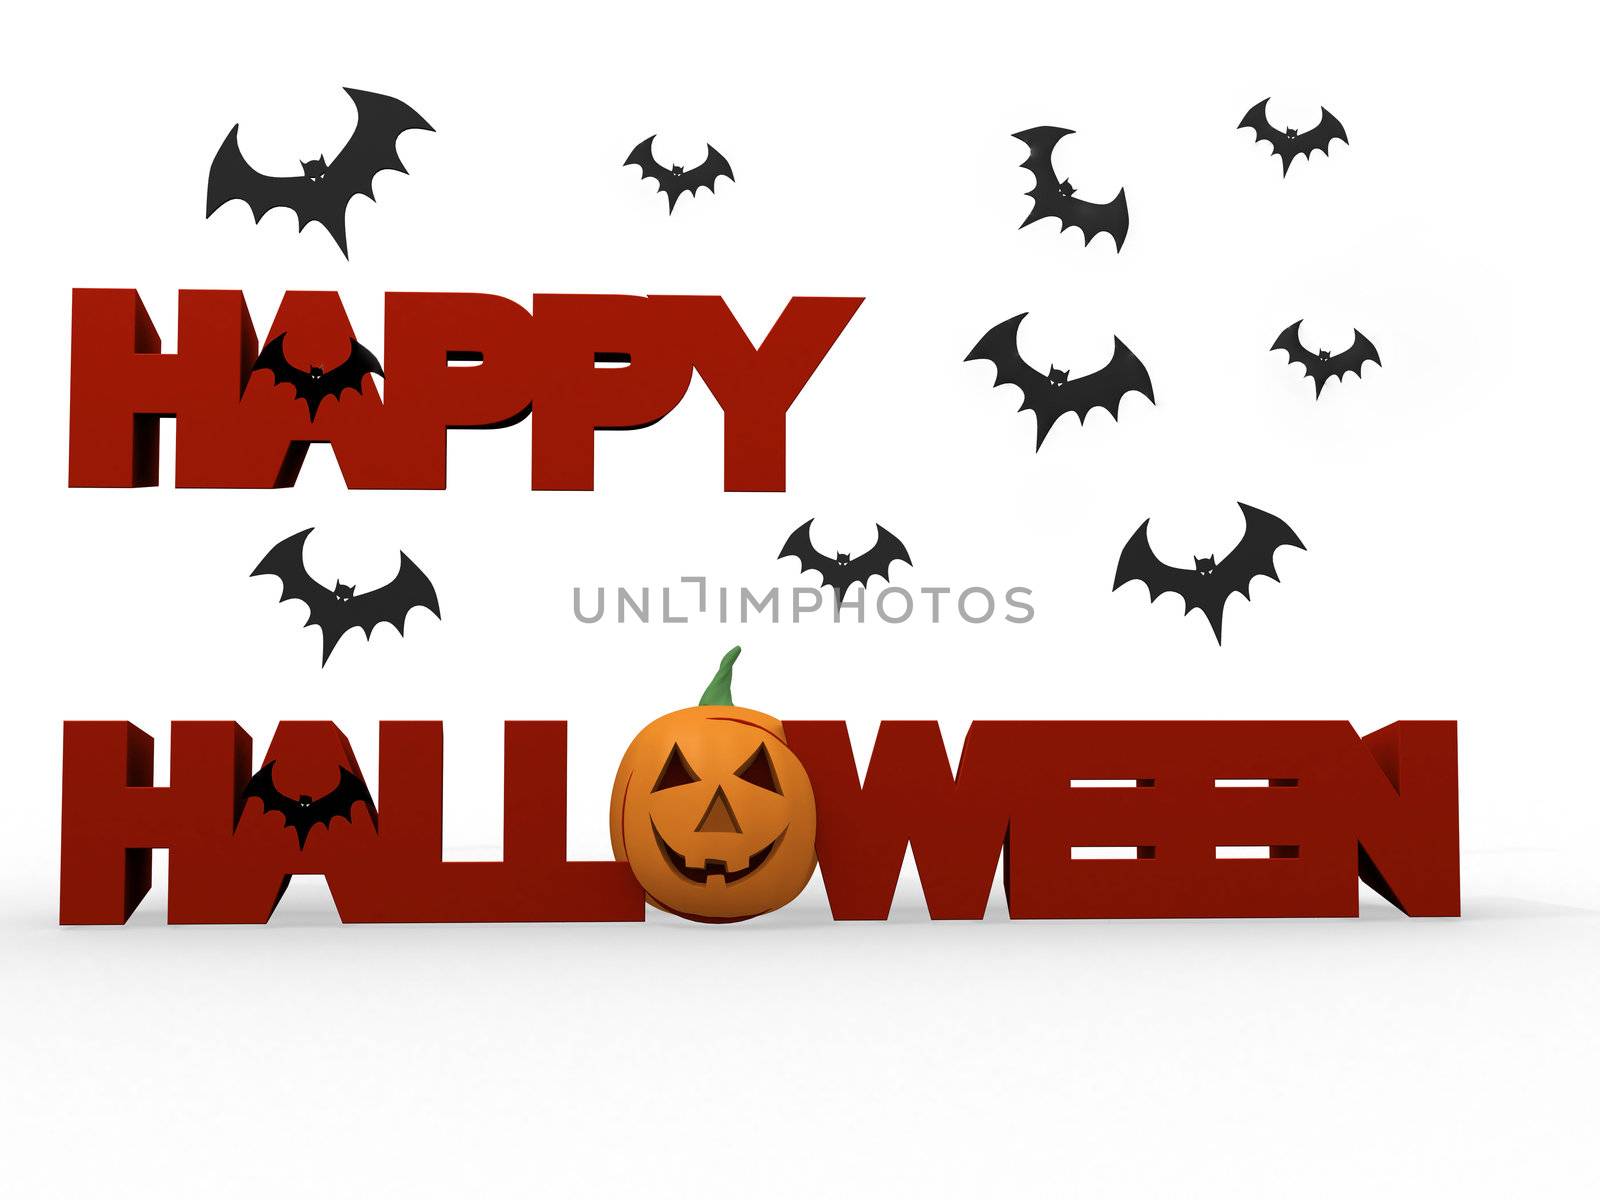 Happy halloween lettering with graphic of fiery pumpkin by dacasdo